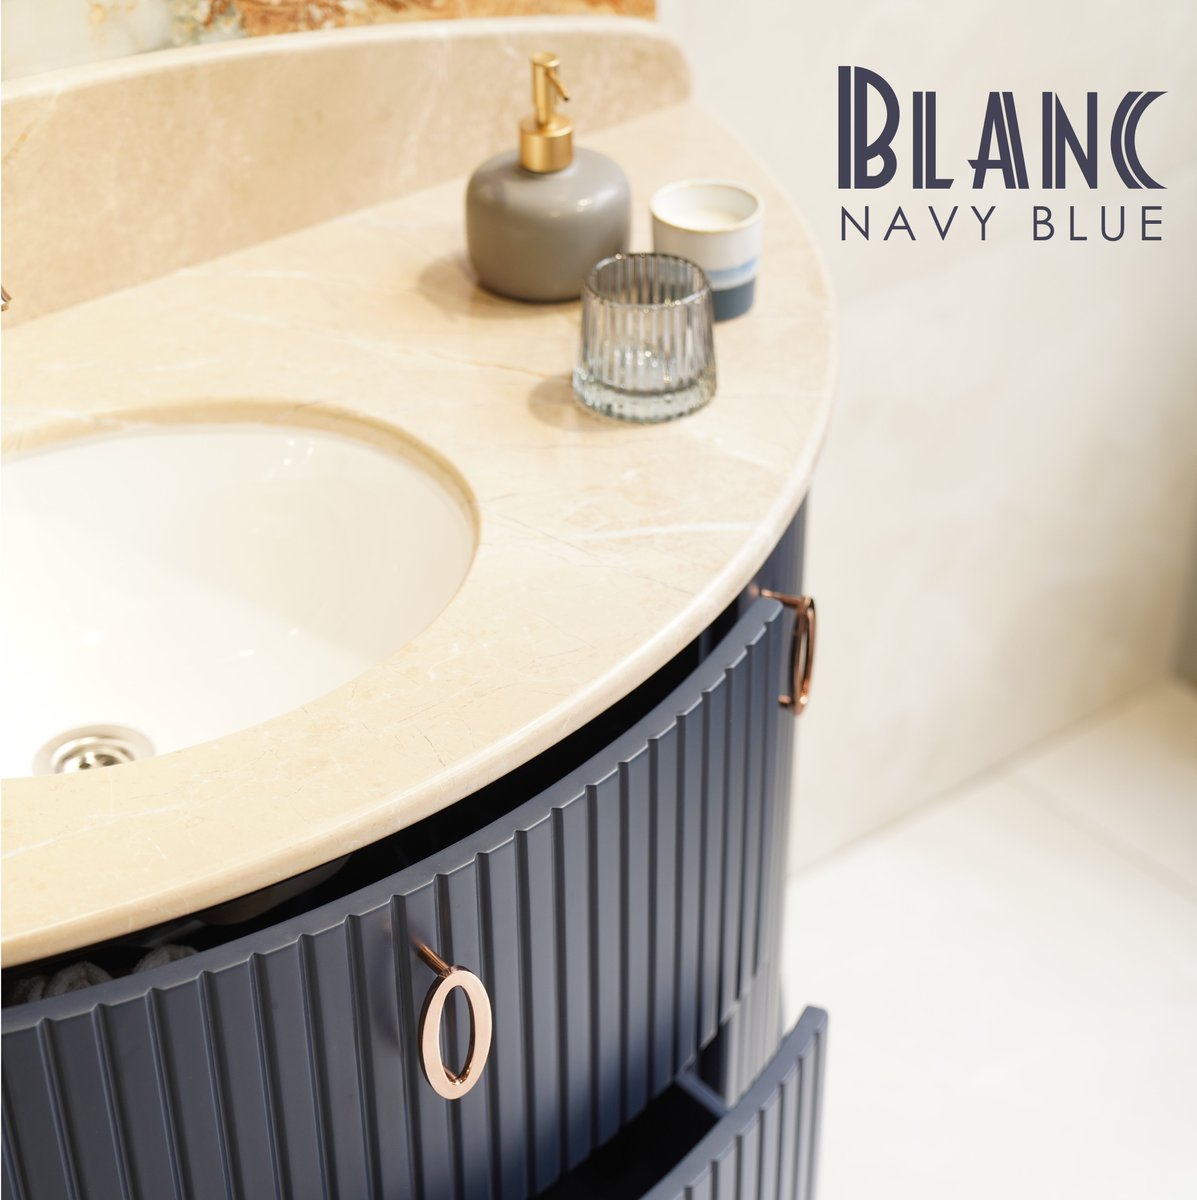 Asil bir banyonun renk kodu: Blanc Lacivert 
Color code of a noble bathroom: Blanc Navy Blue

#voq #voqbagno #lamodainbagno #arredobagno #bathroomfurniture #banyomobilyası #blanc